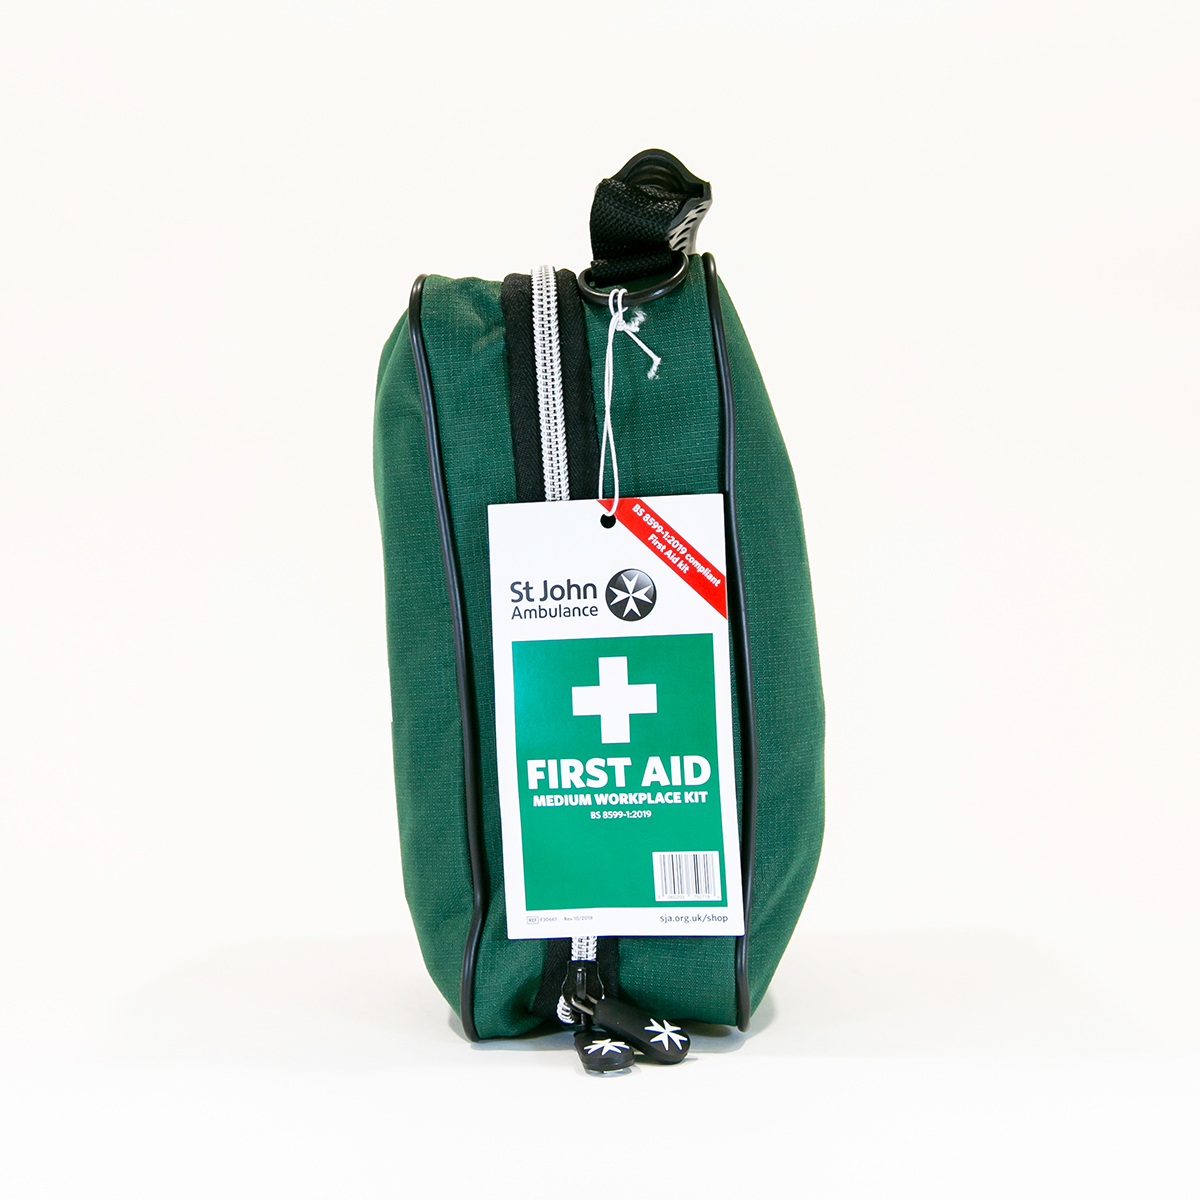 St John Ambulance Medium Zenith Workplace First Aid Kit BS 8599-1:2019